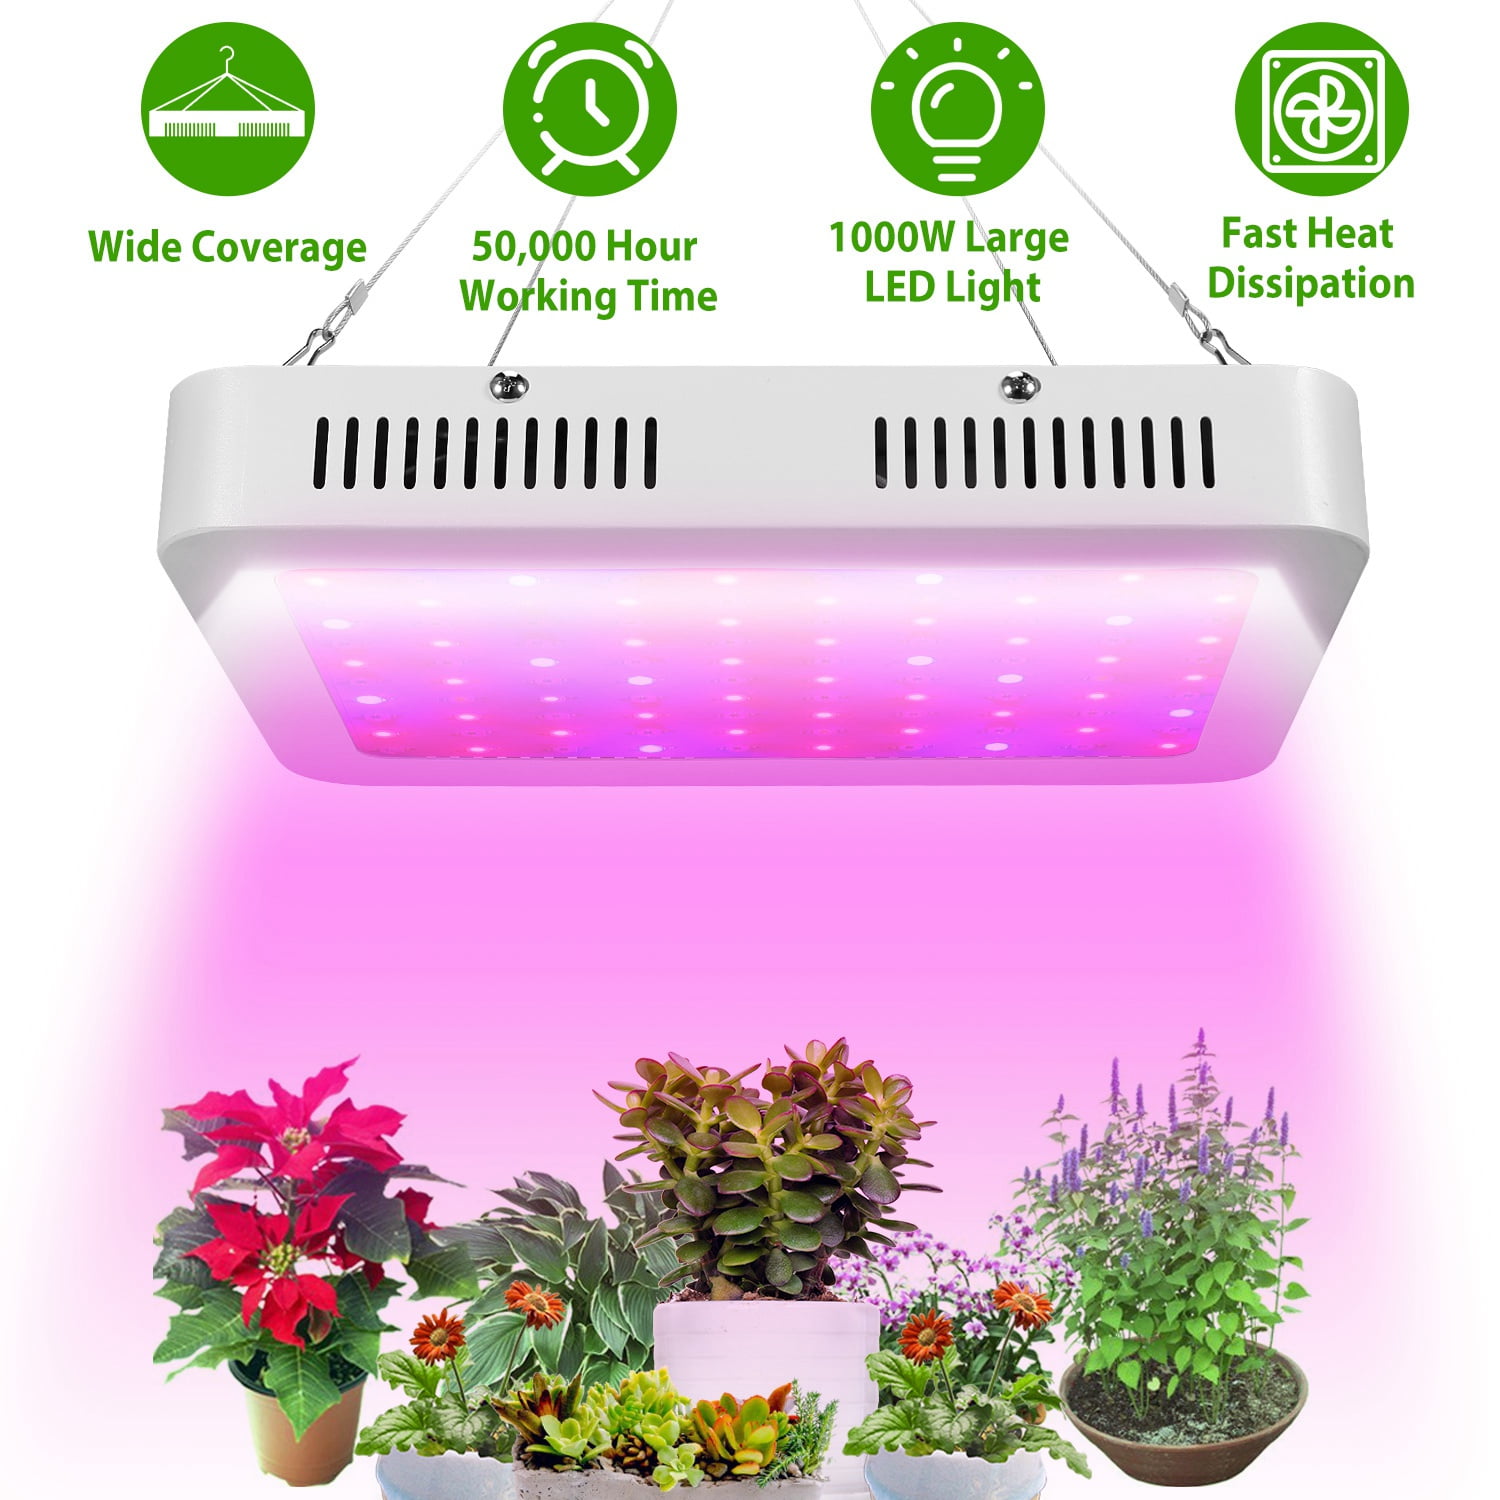 Details about   2000W Indoor LED Full Spectrum LED Plant Grow Light Hydroponics Veg Flower Lamp 